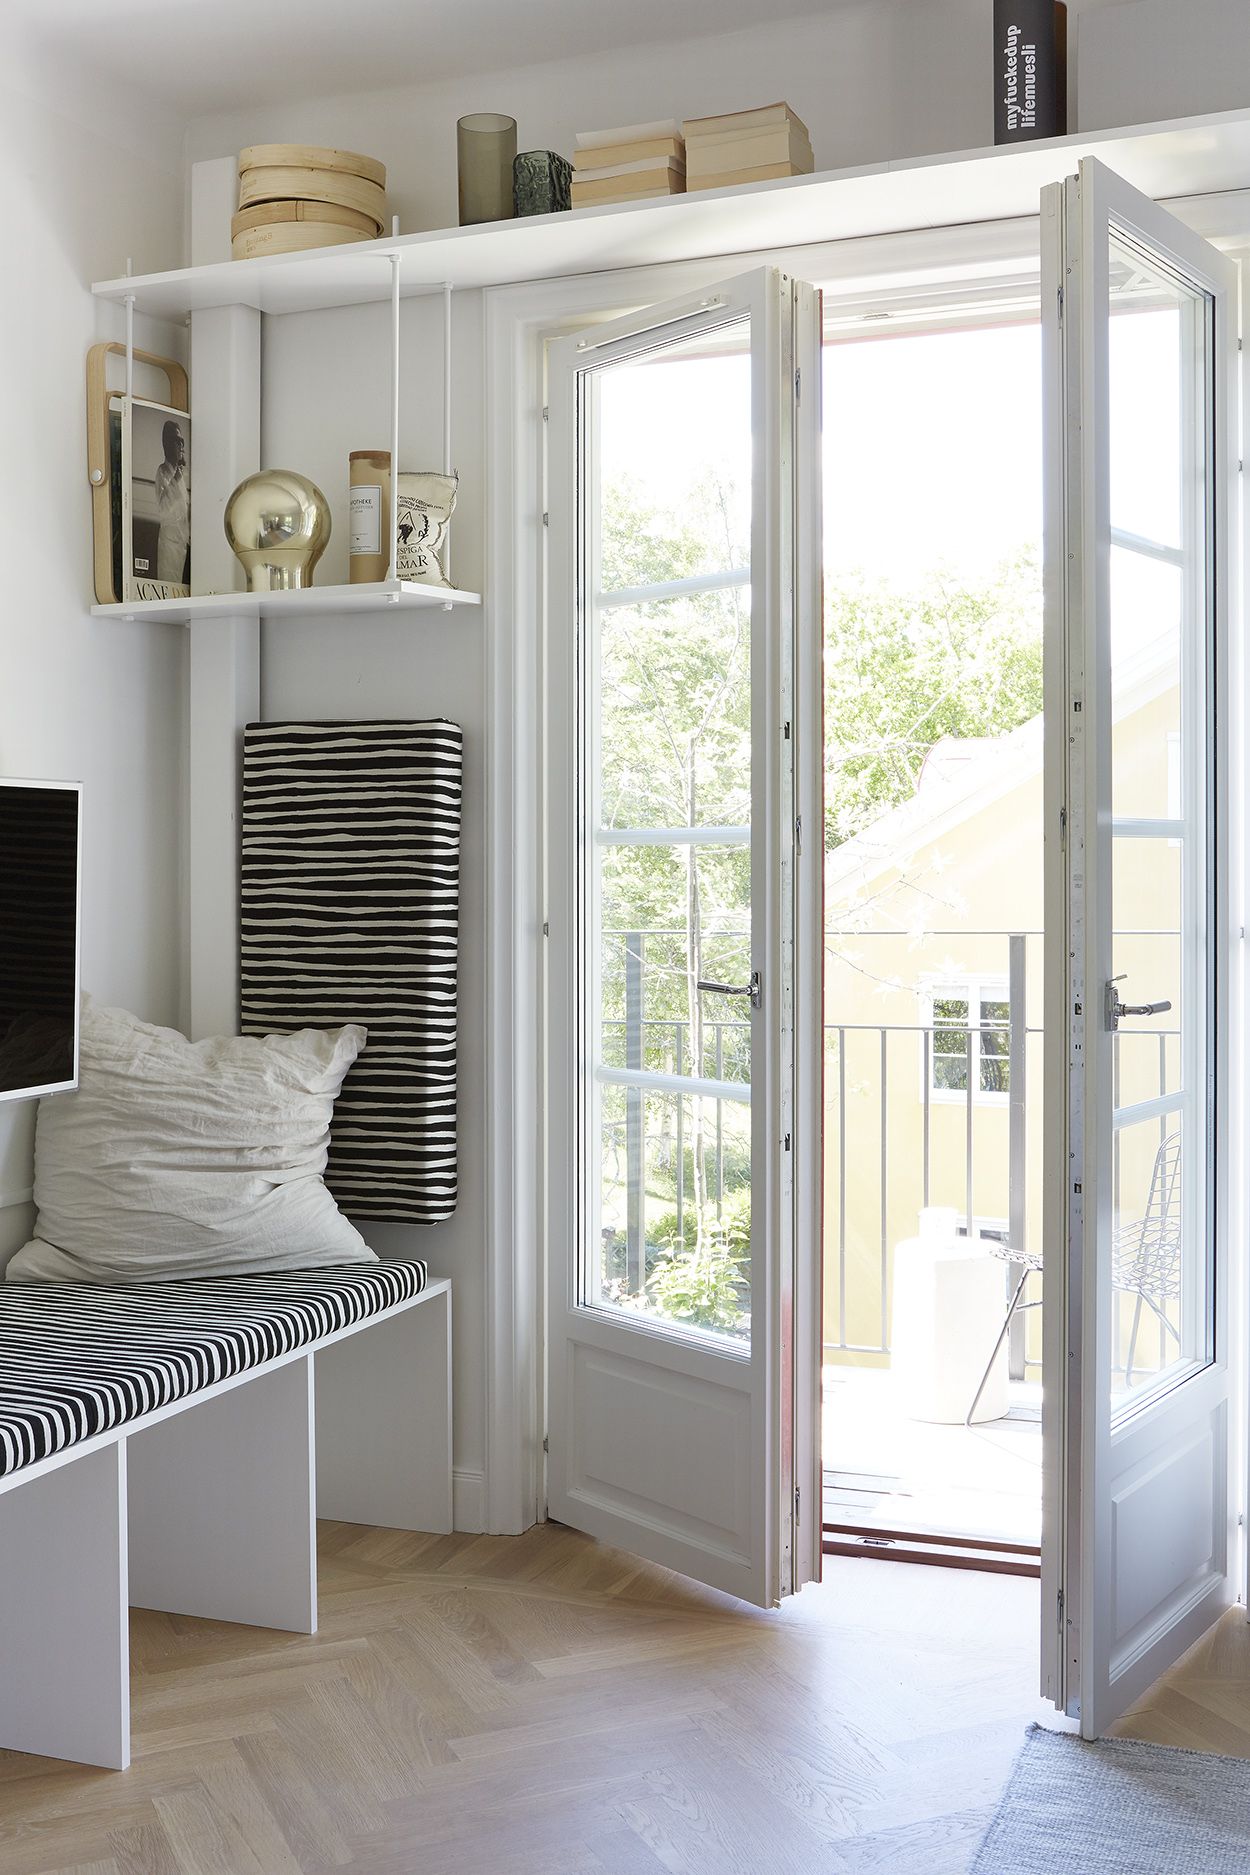 21 Small House Interior Design Ideas How To Decorate A Small Space,Nordic Interior Design